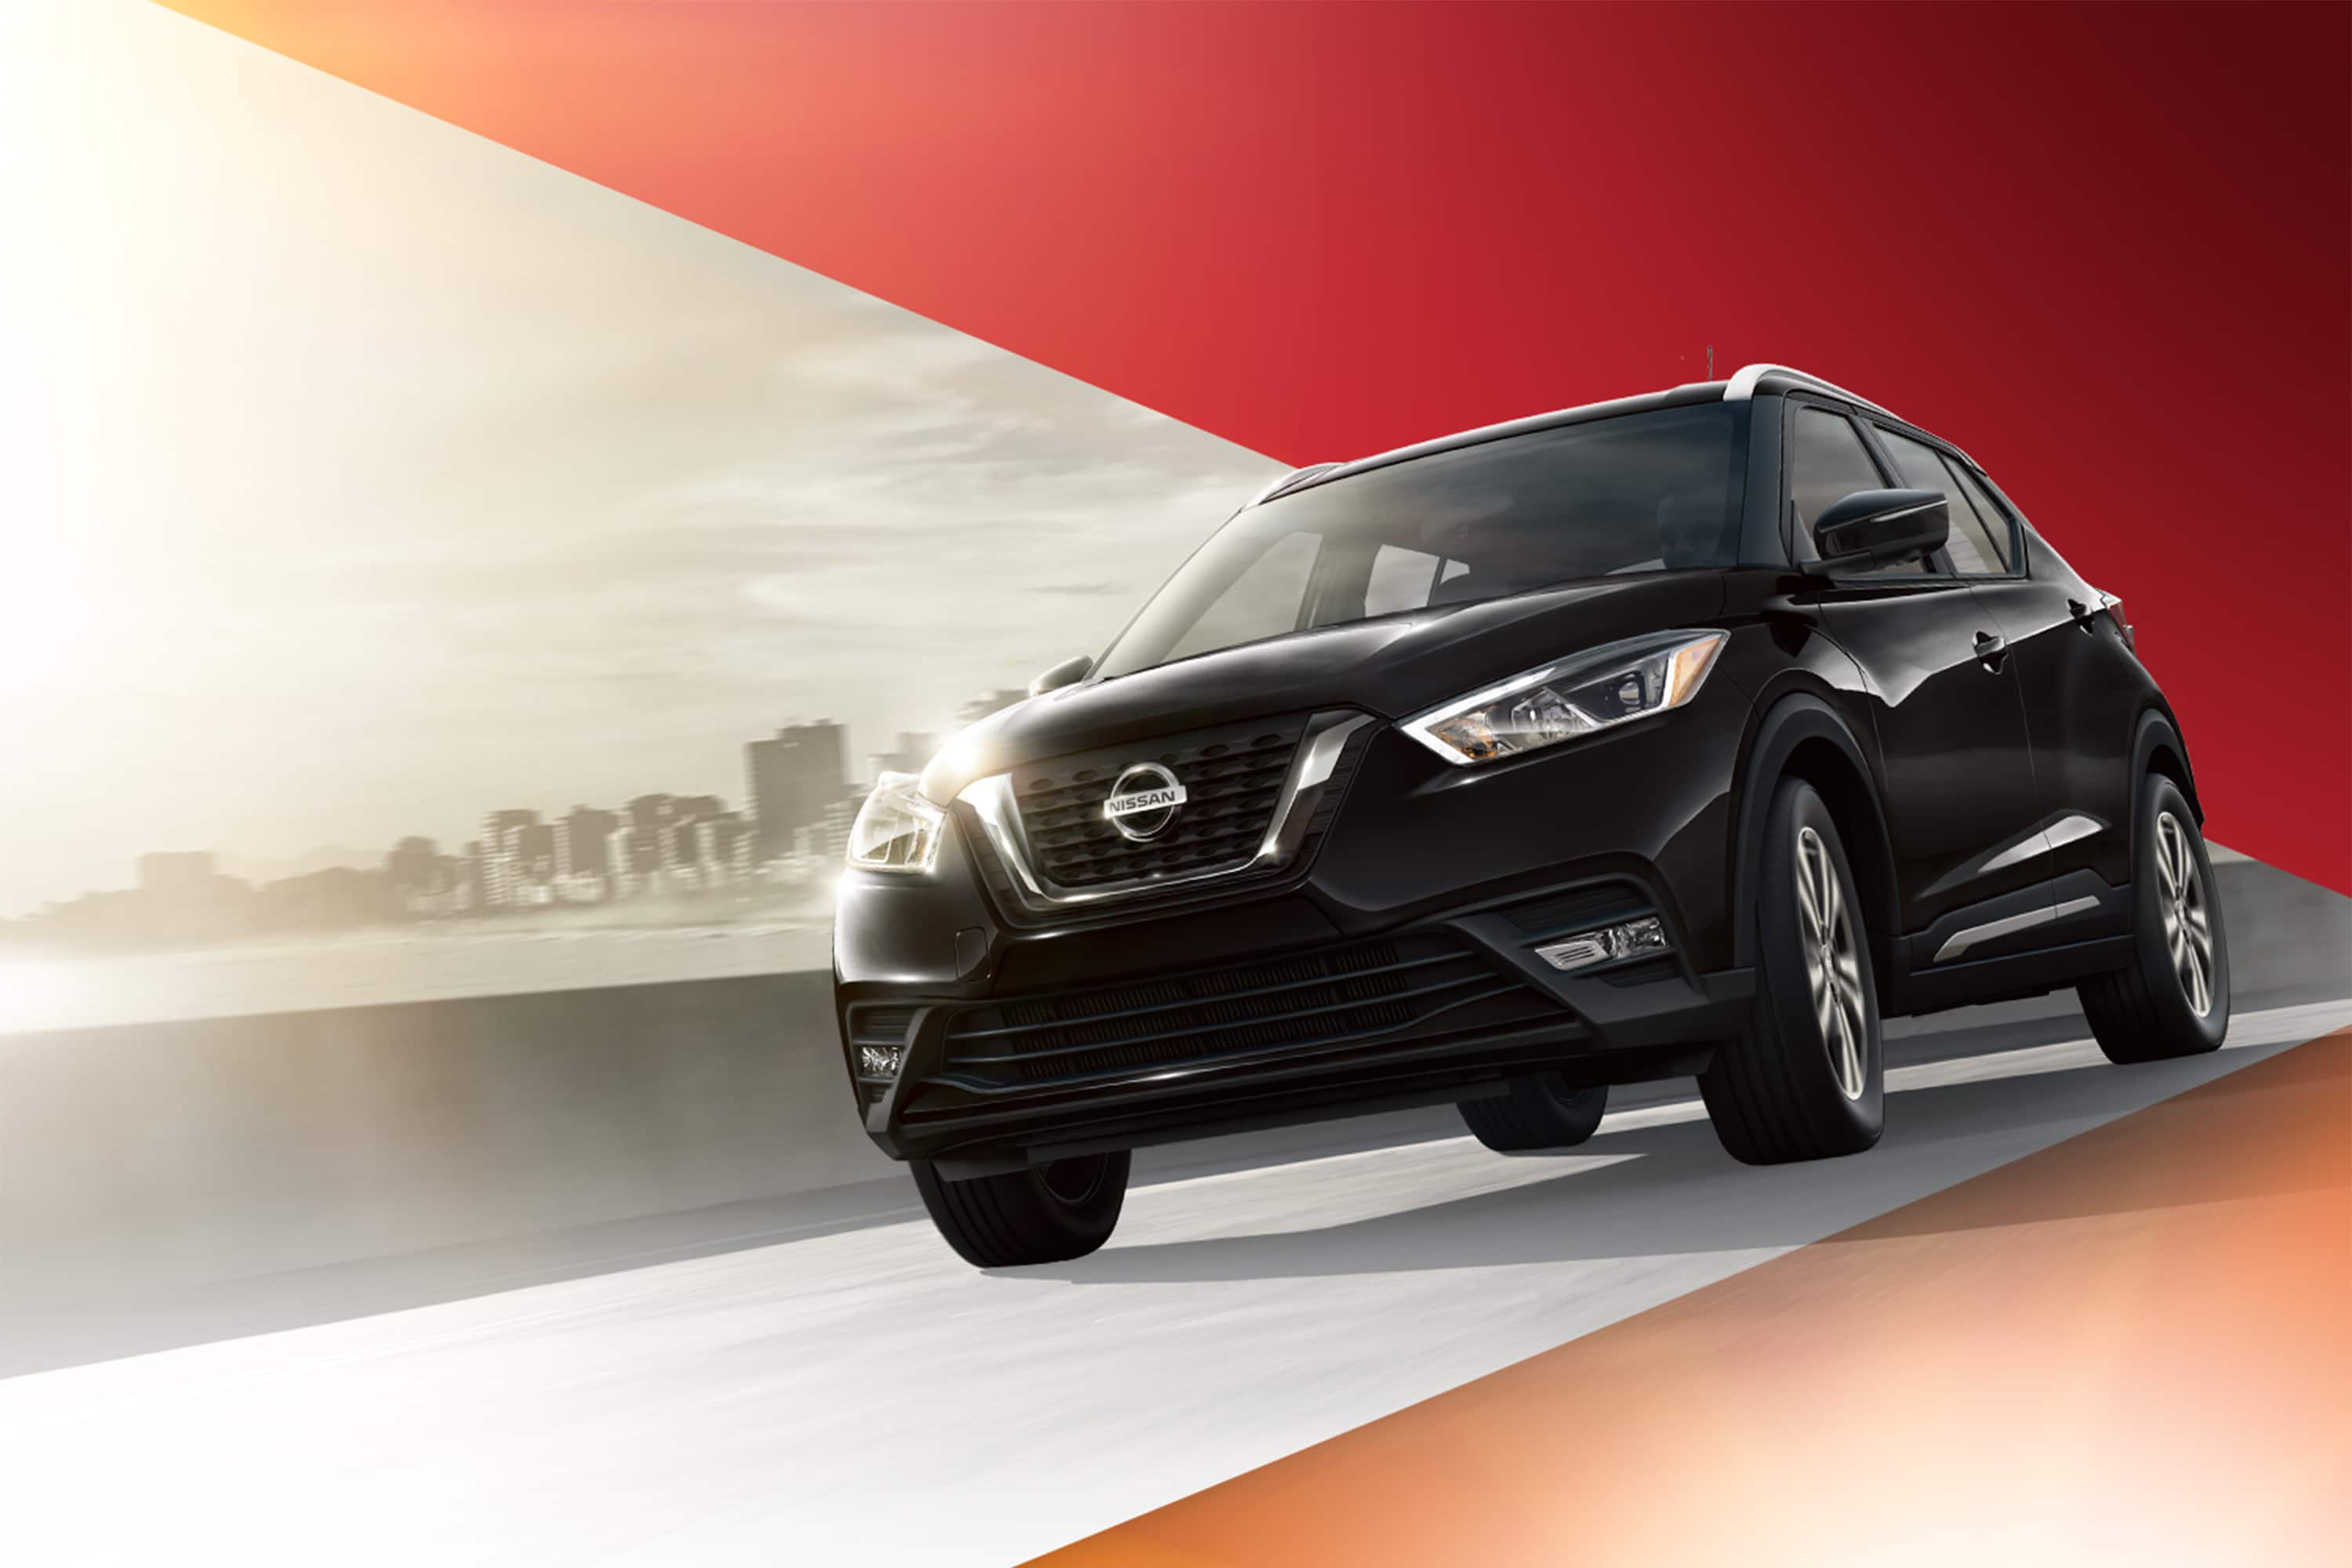 Nissan Kicks SUV car officially open bookings on December 14